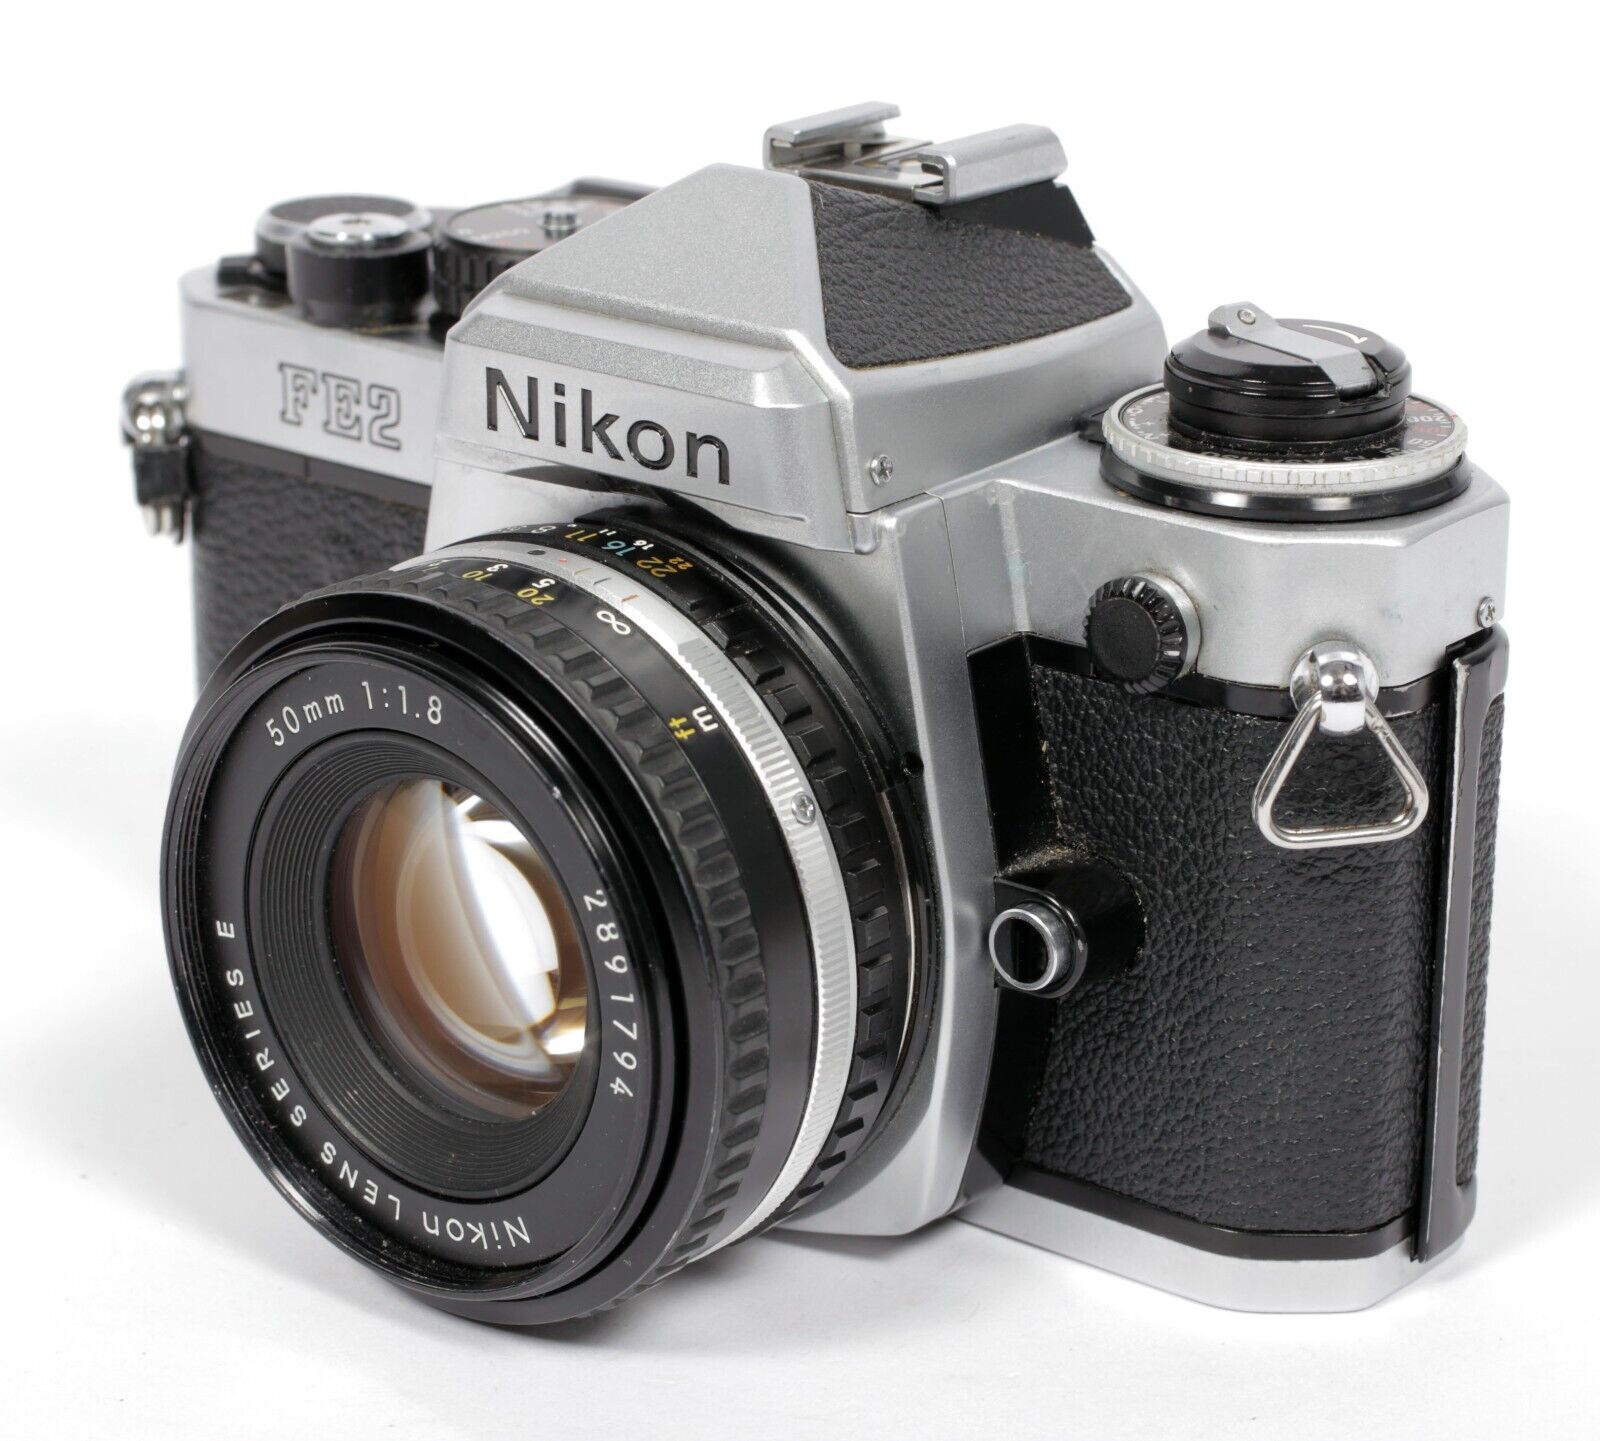 Nikon FE2 35mm SLR Film Camera with 50mm F1.8 lens #914 